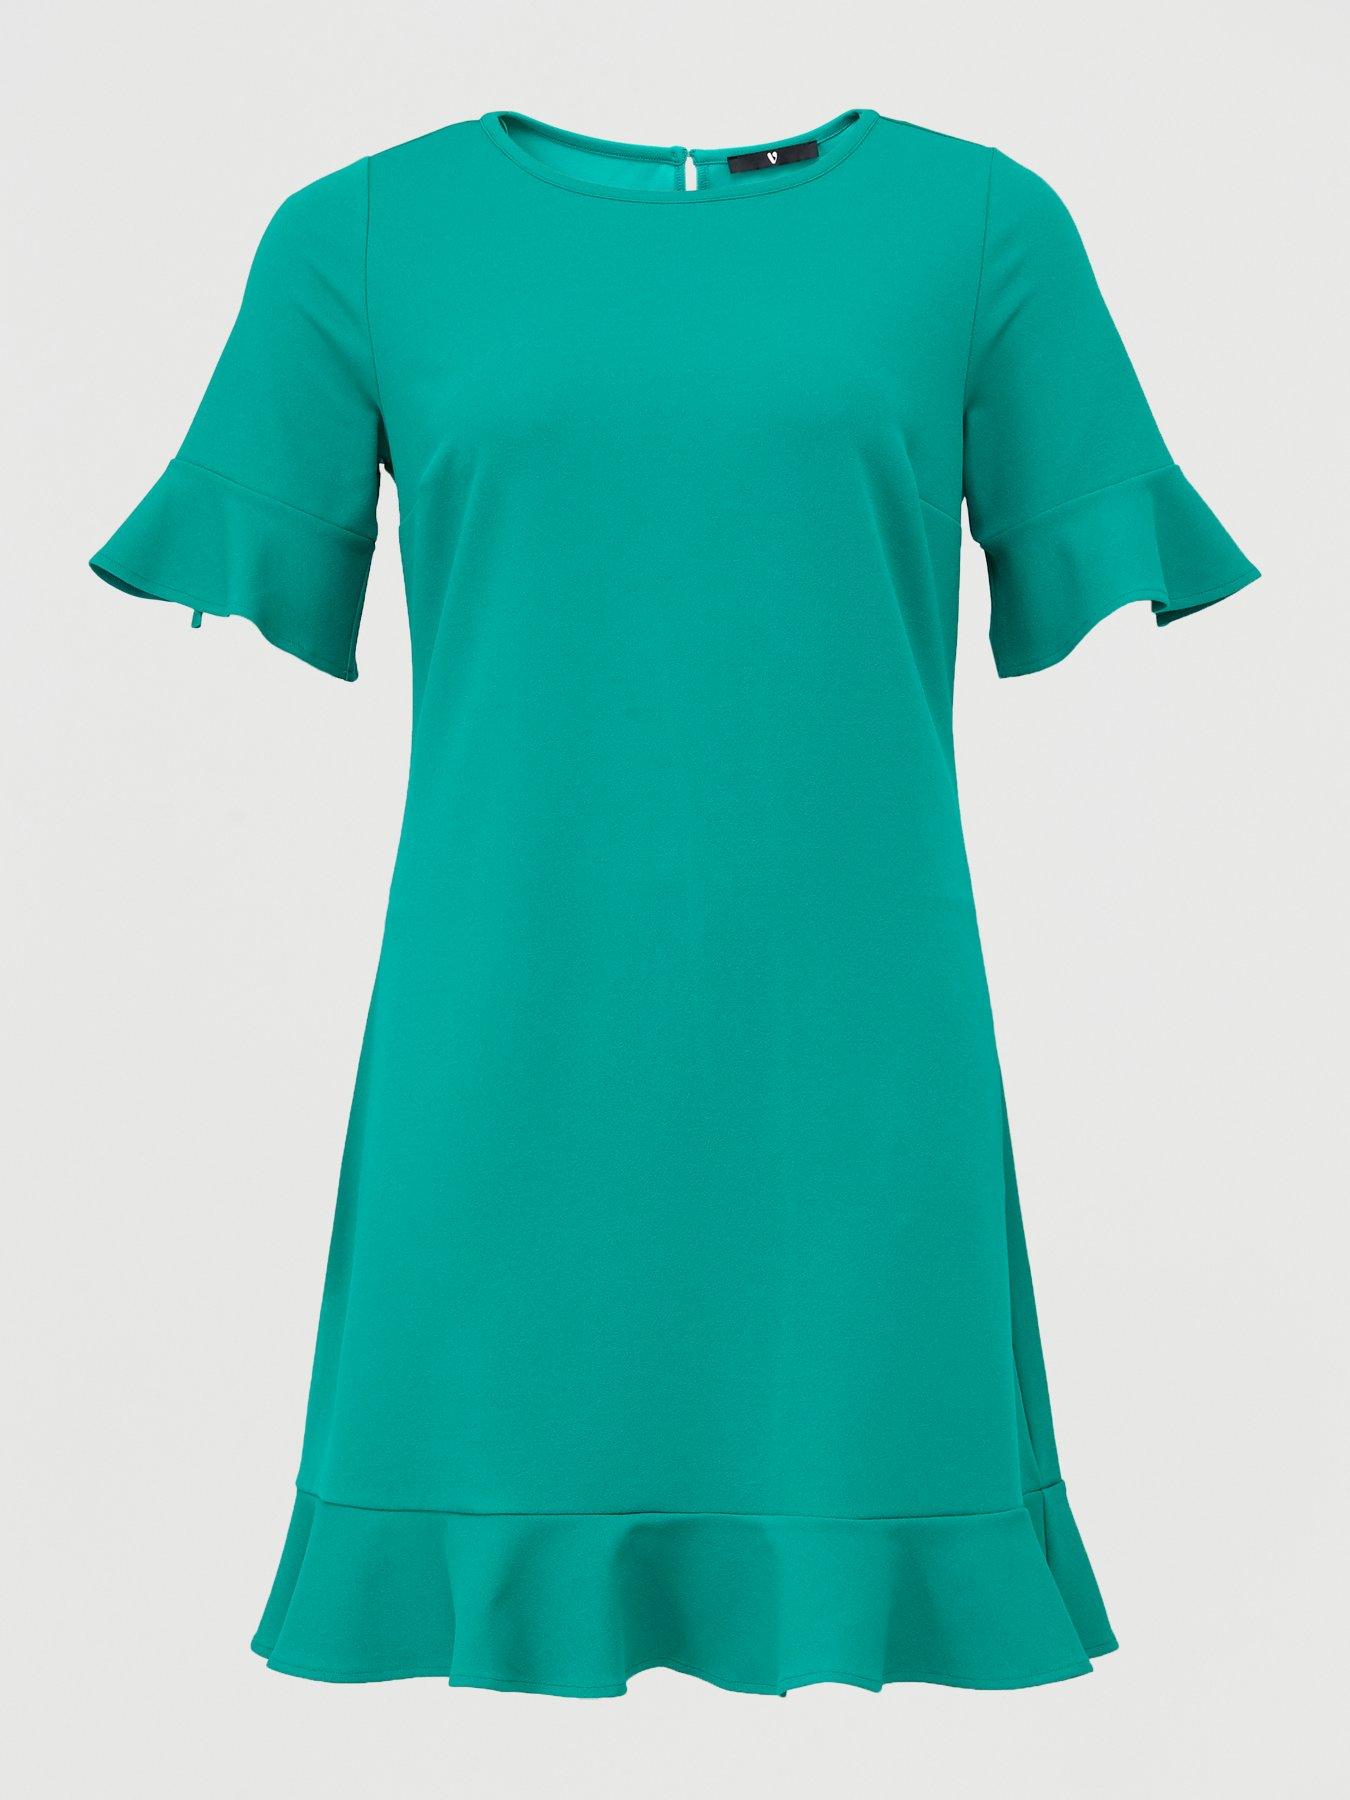 green plus size dresses uk